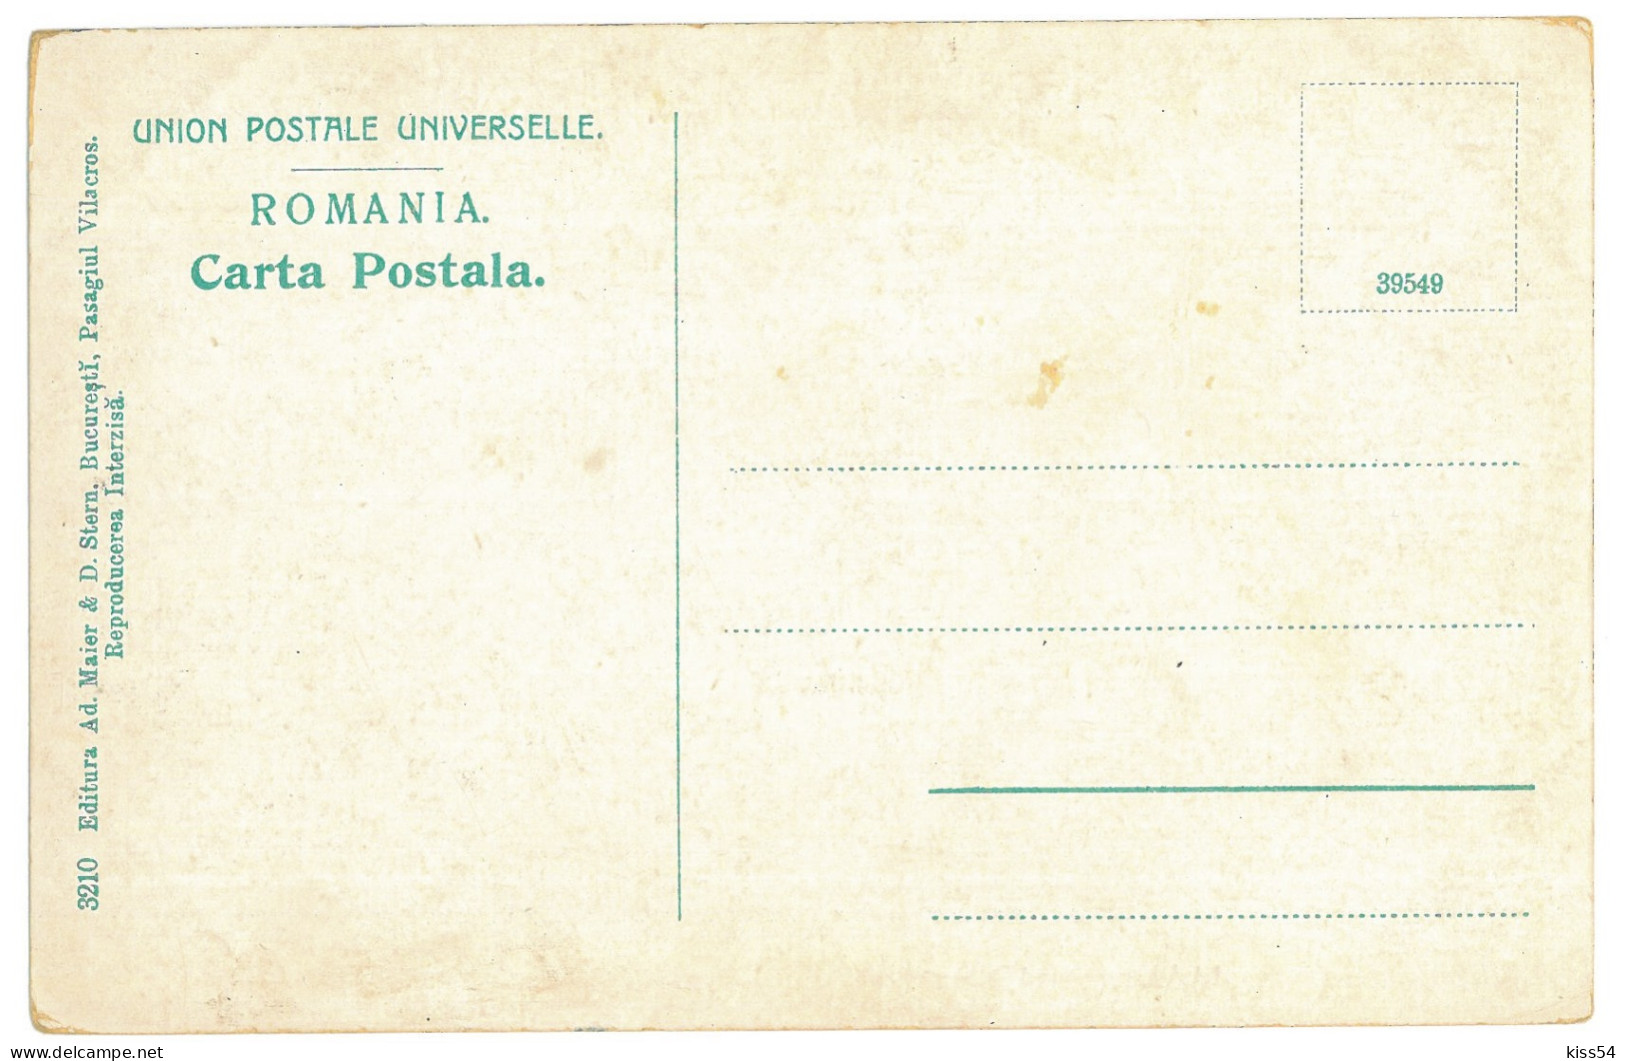 RO 09 - 25106 MORENI, Dambovita, Oil Wells, FIRE, Romania - Old Postcard - Unused - Rumania